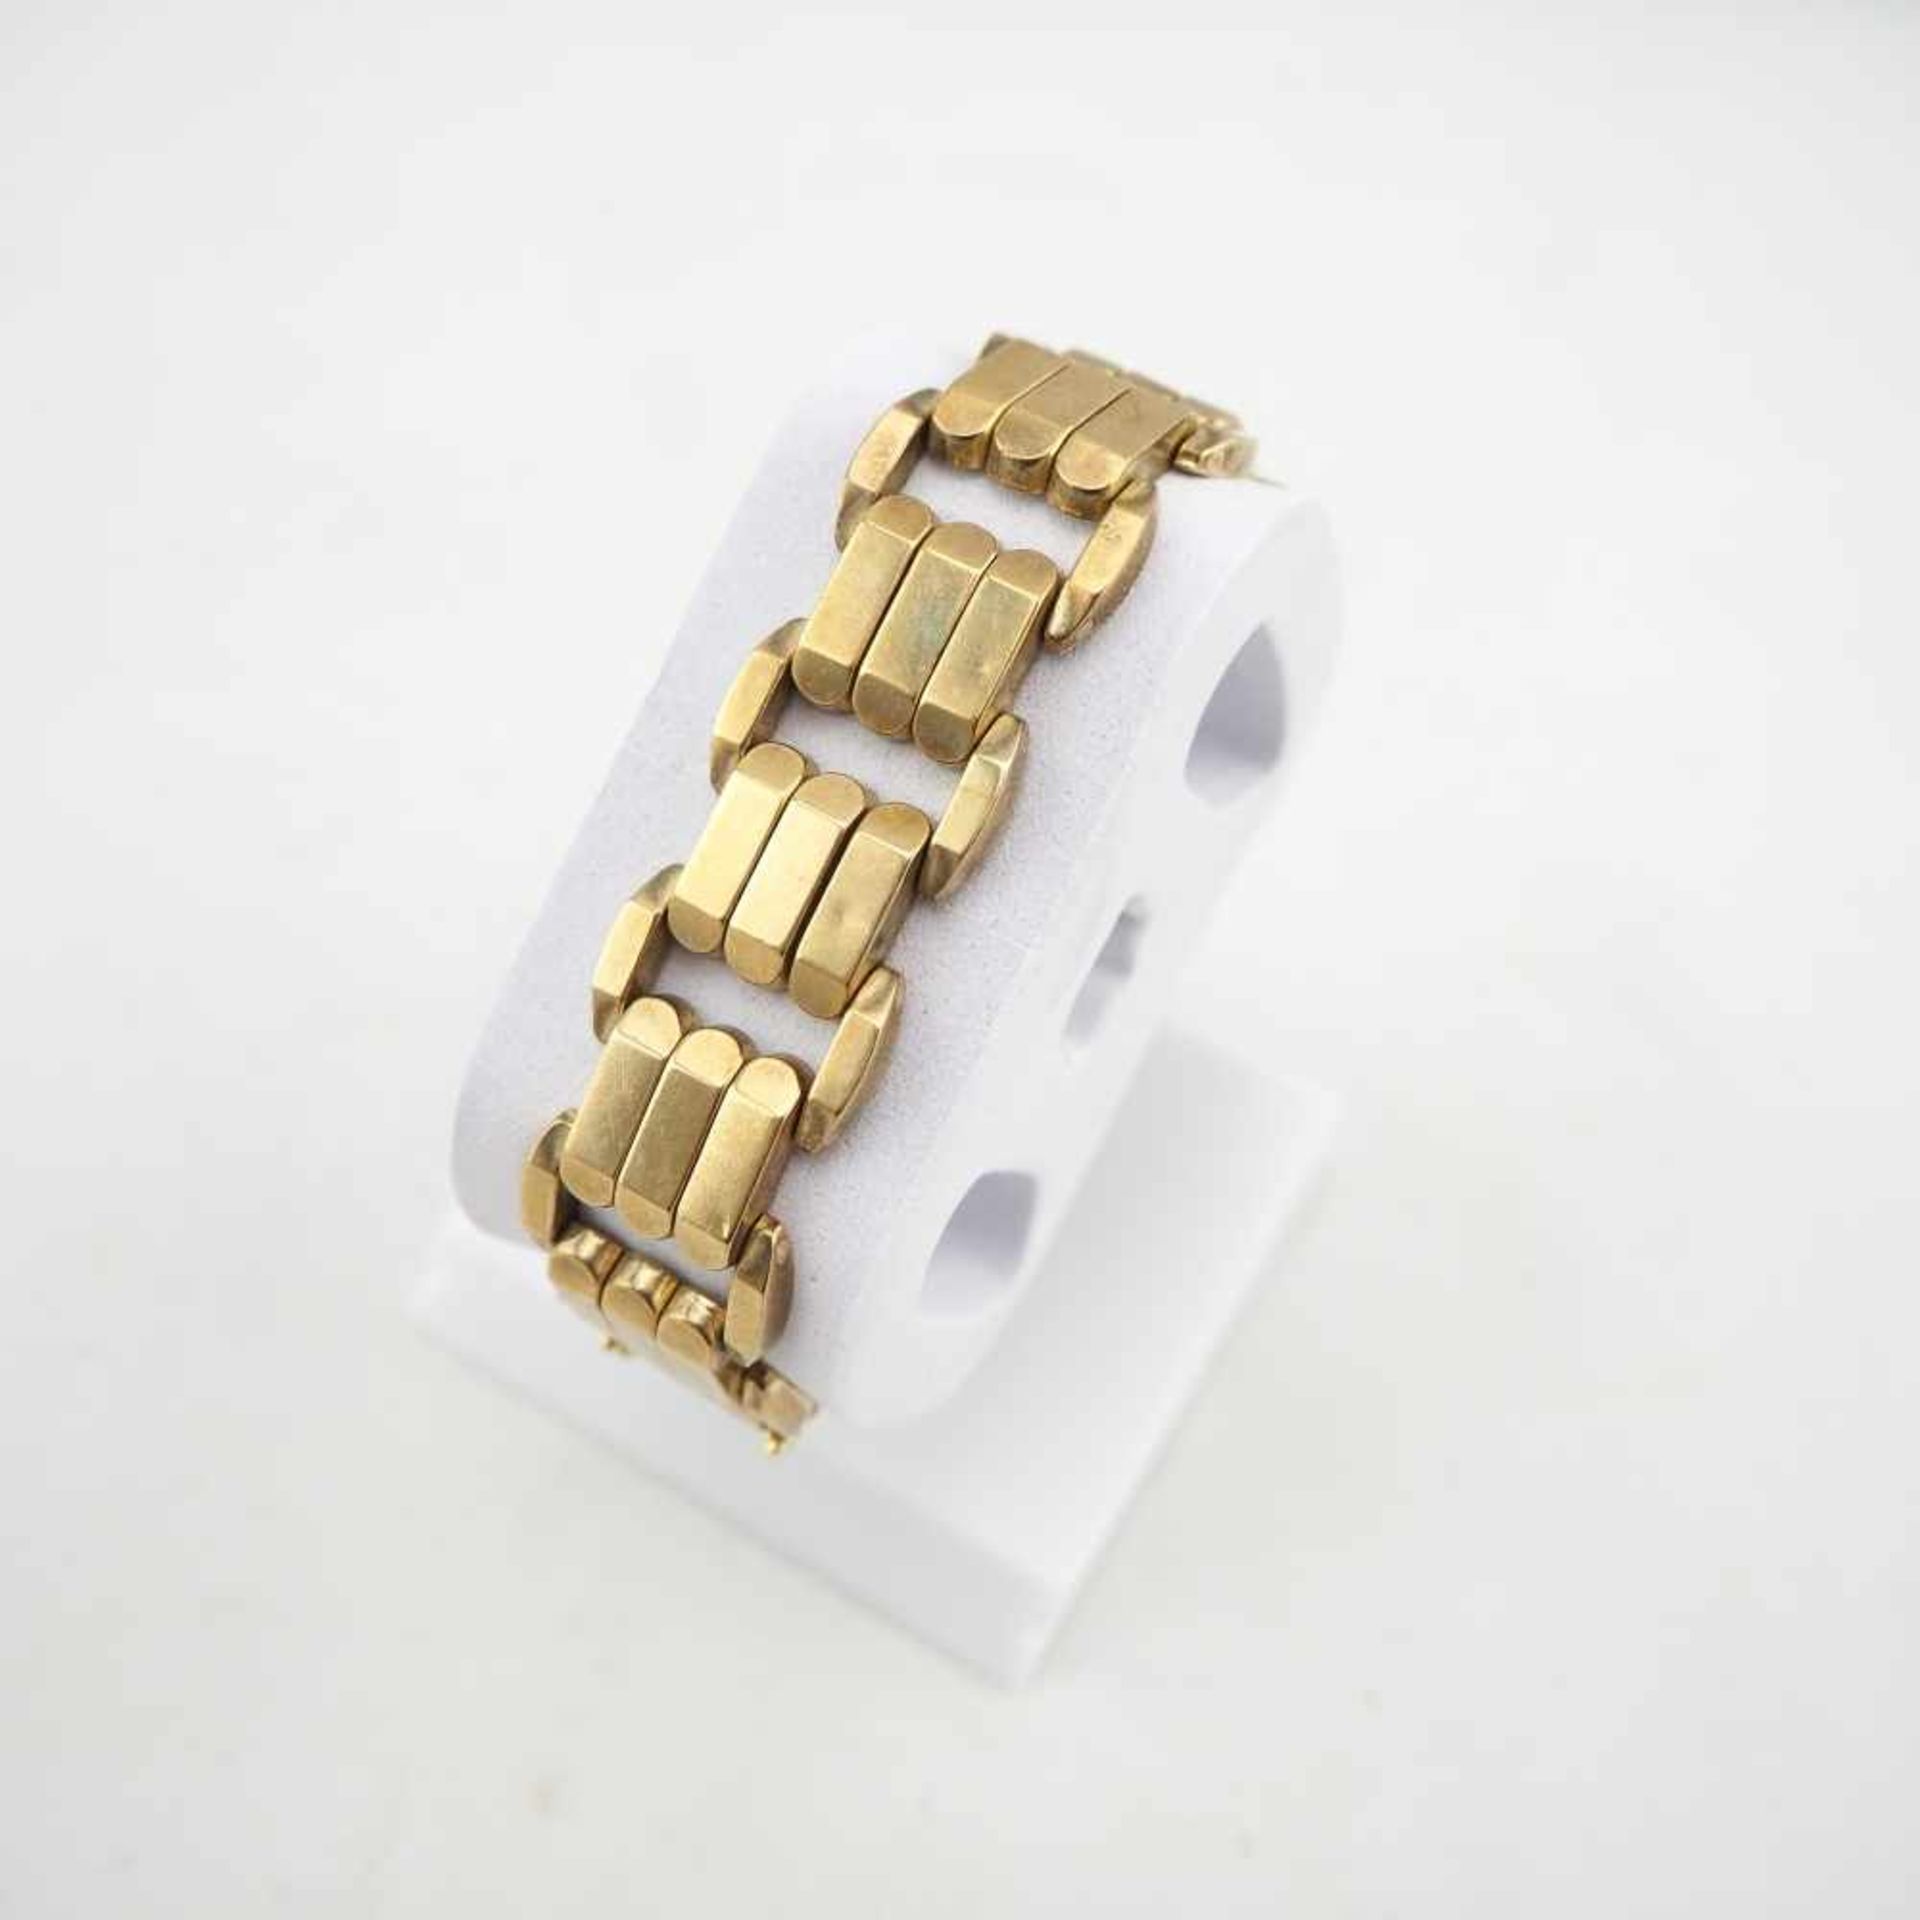 Armband, 8kt Gold30,5g Gesamtgewicht, 19cm Gesamtlänge, 333er Goldstempel am Verschluss, gebrauchtes